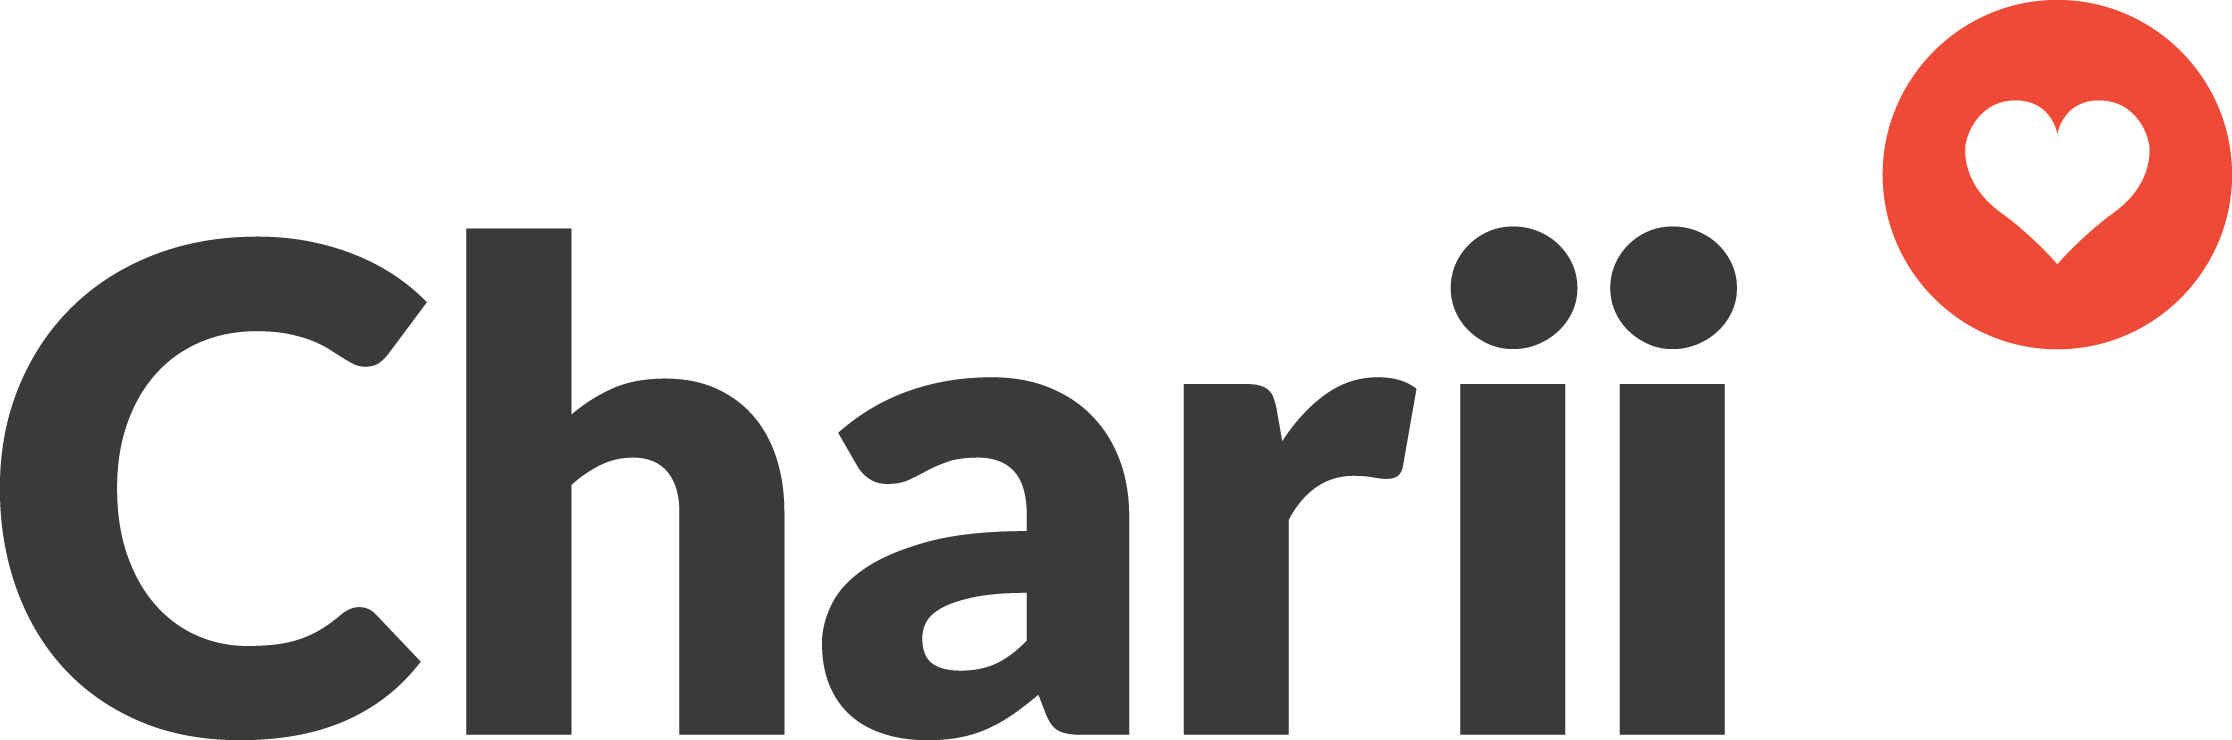 charili-logo